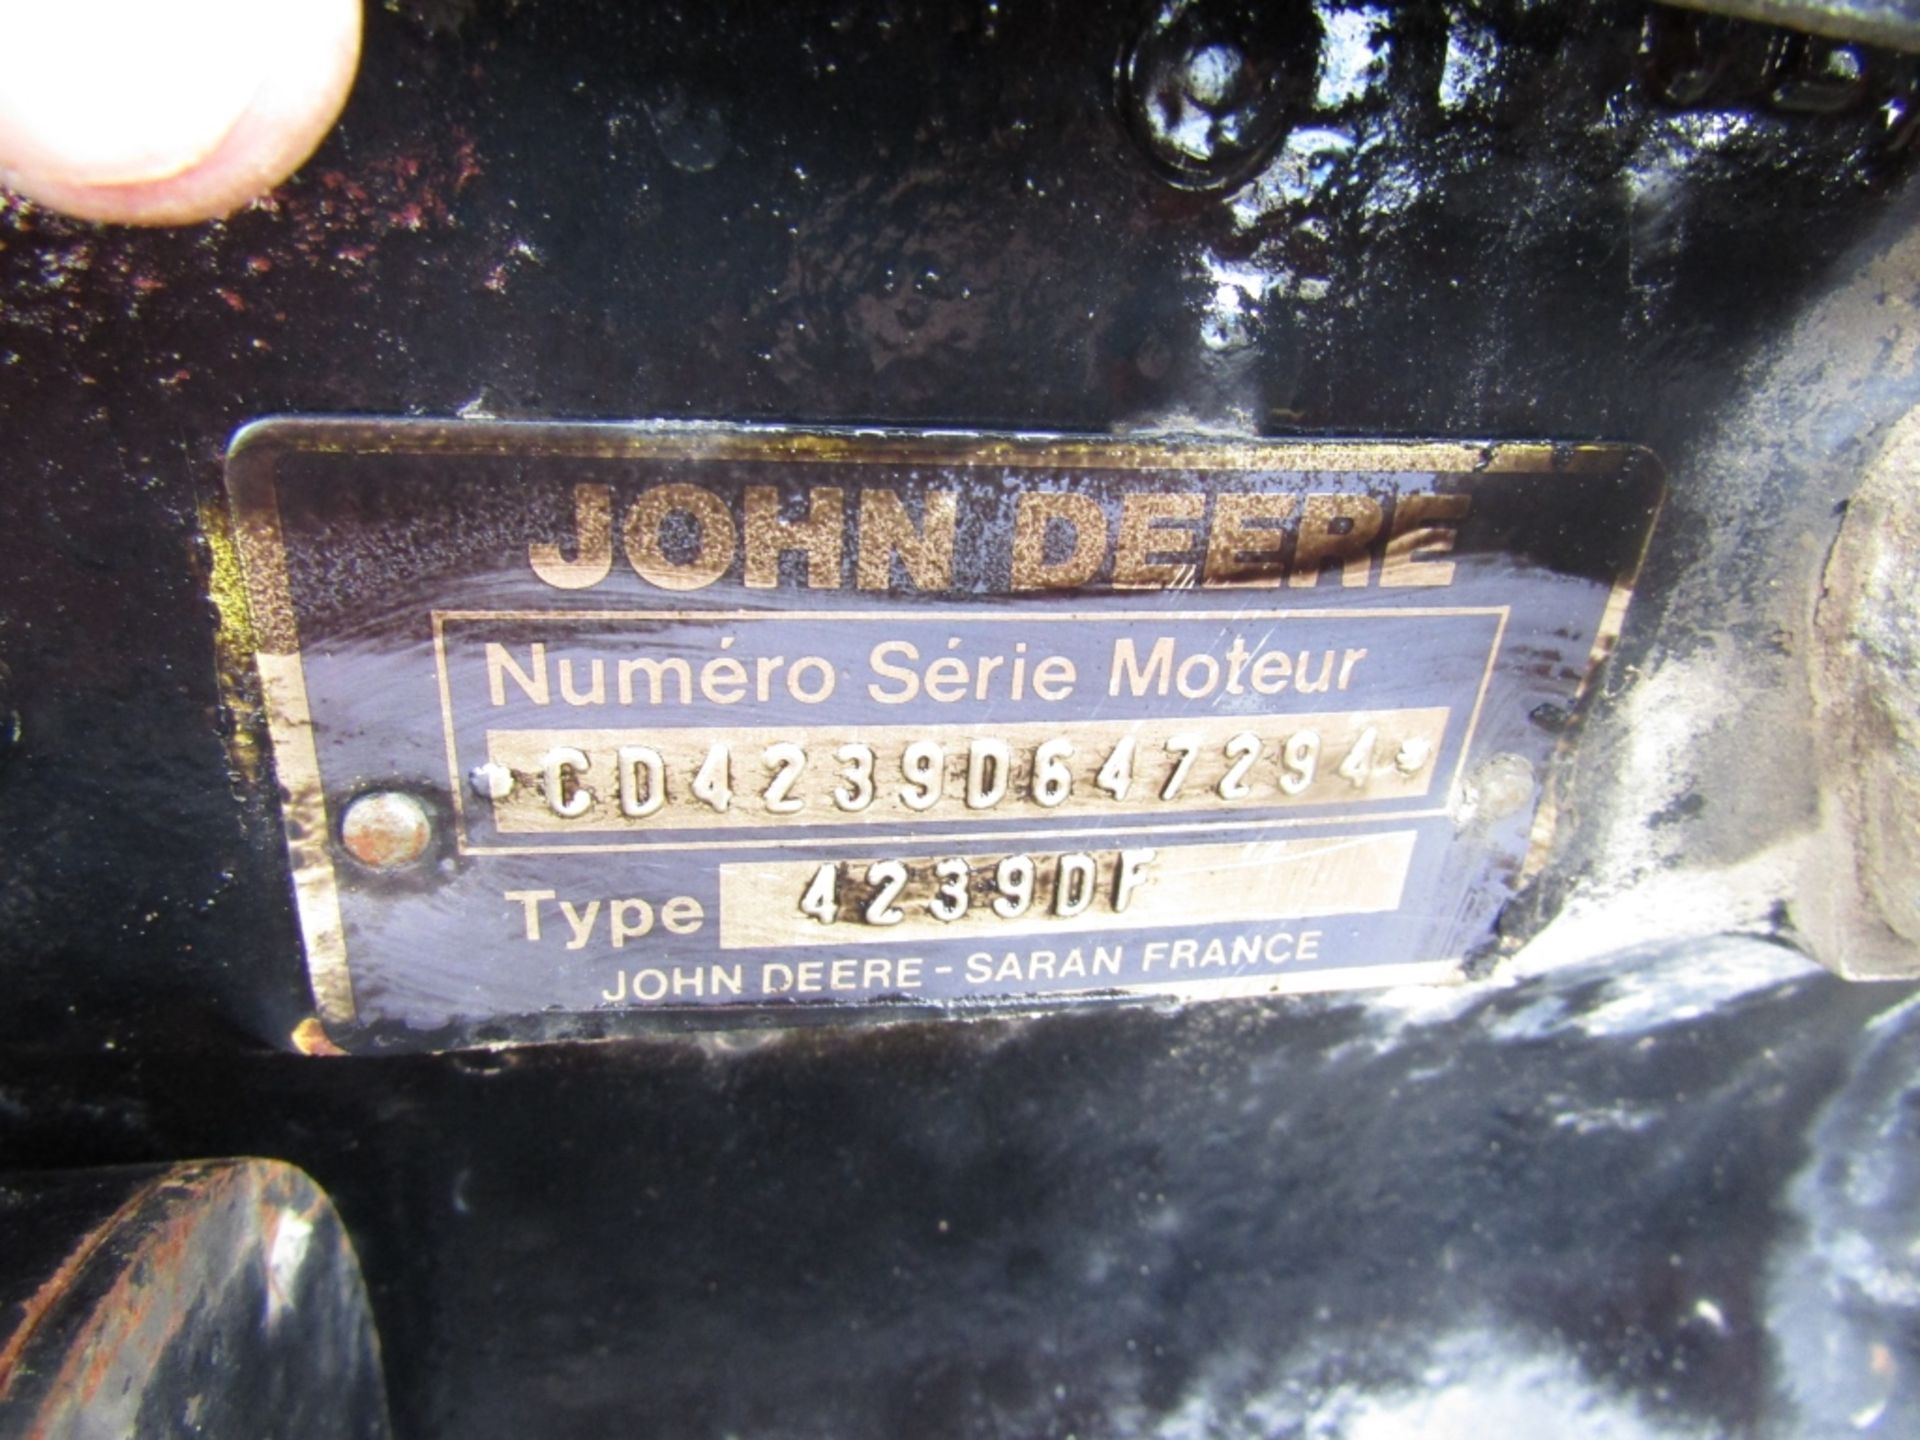 Gordon Smith & Co, Inc. Compressor, 3491 Hours, Serial #200B336, John Deere Saran Engine, # - Image 13 of 14